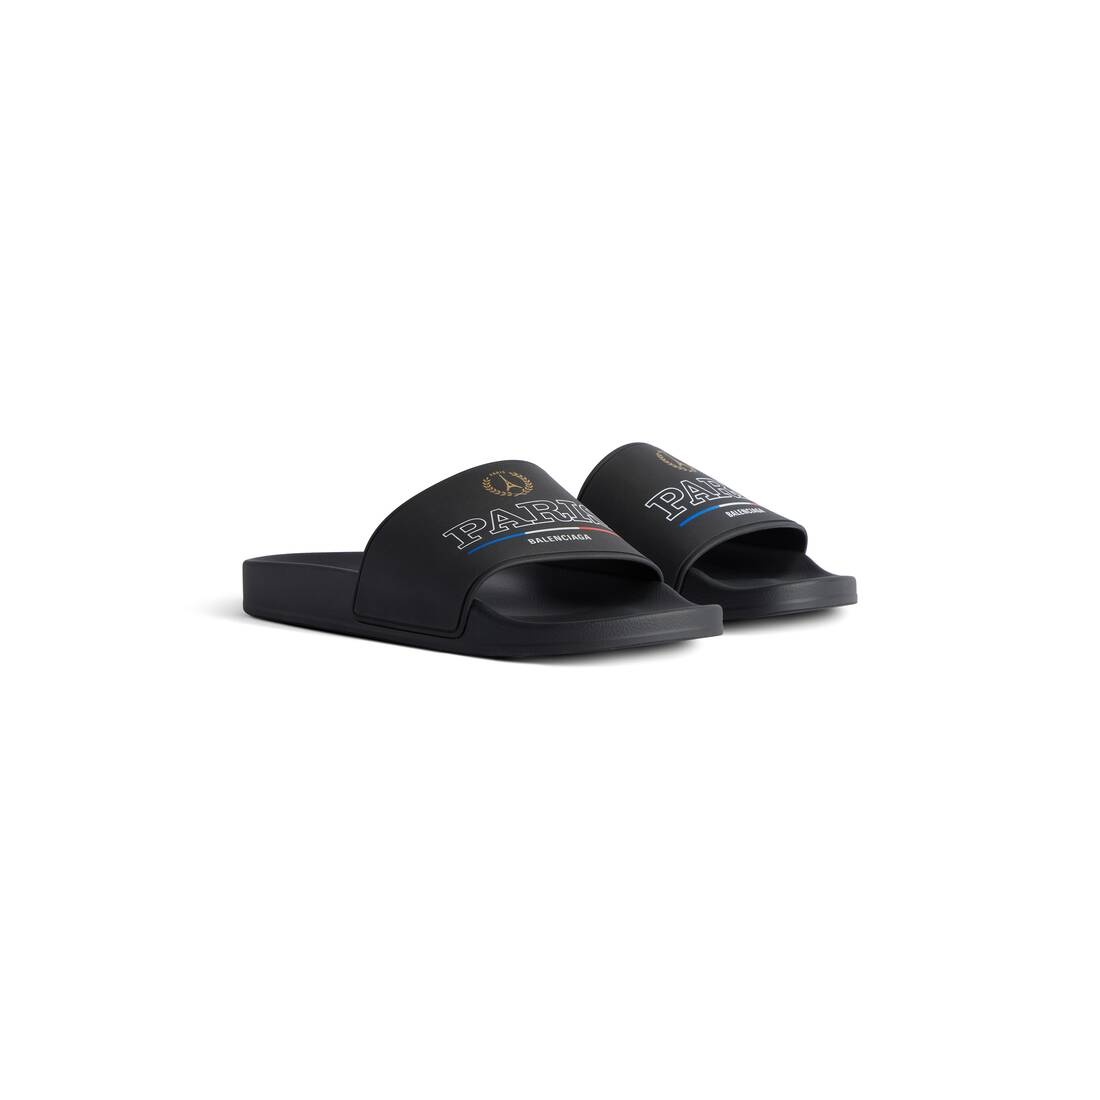 Men's Pool Slide Sandal  in Black - 2